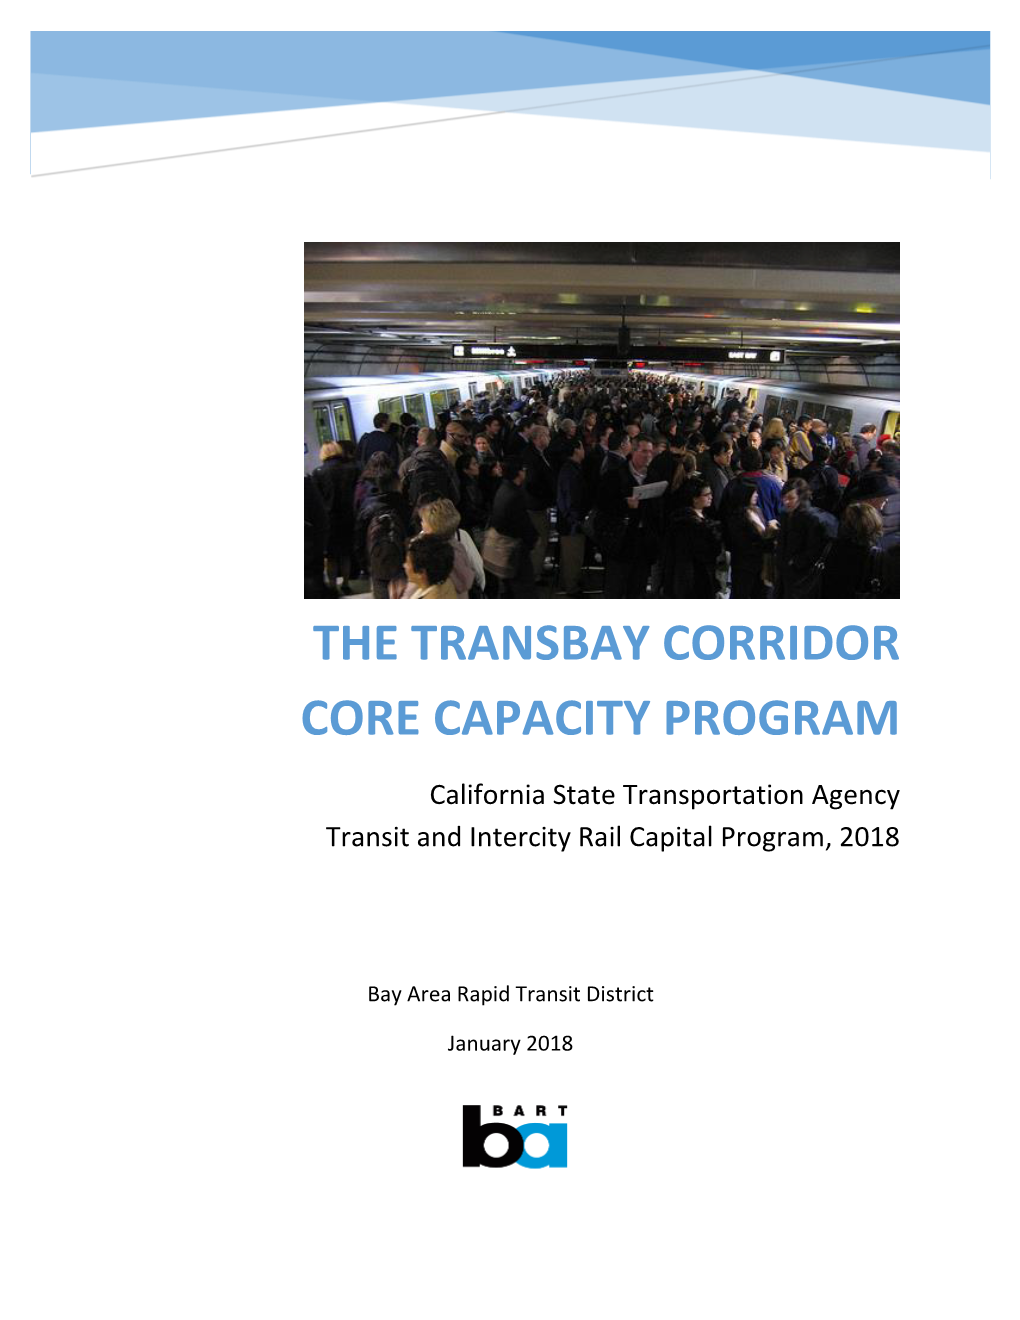 The Transbay Corridor Core Capacity Program